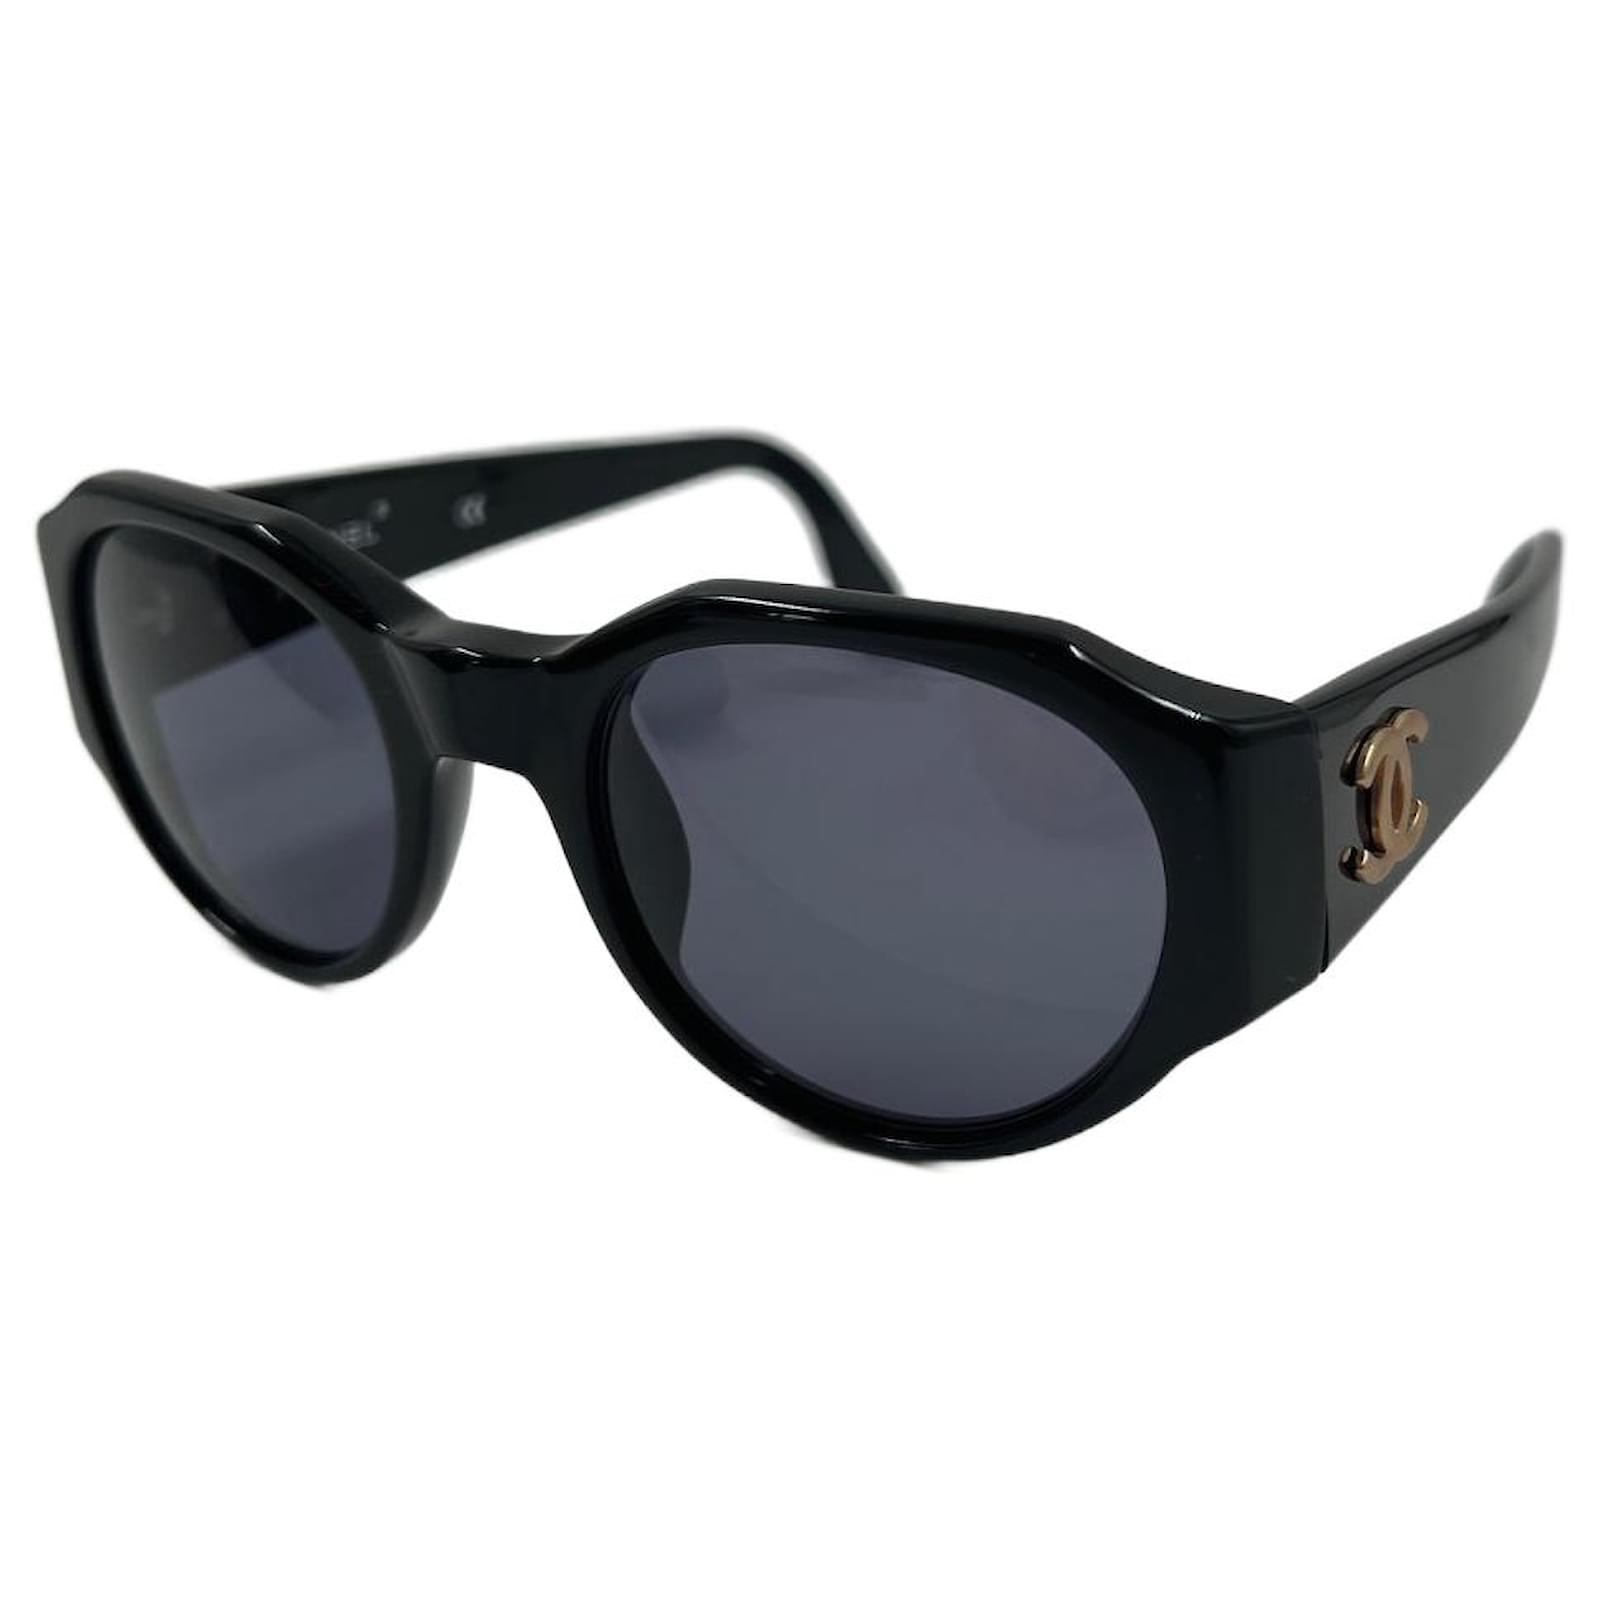 Chanel sunglasses 02461 94305 - Gem